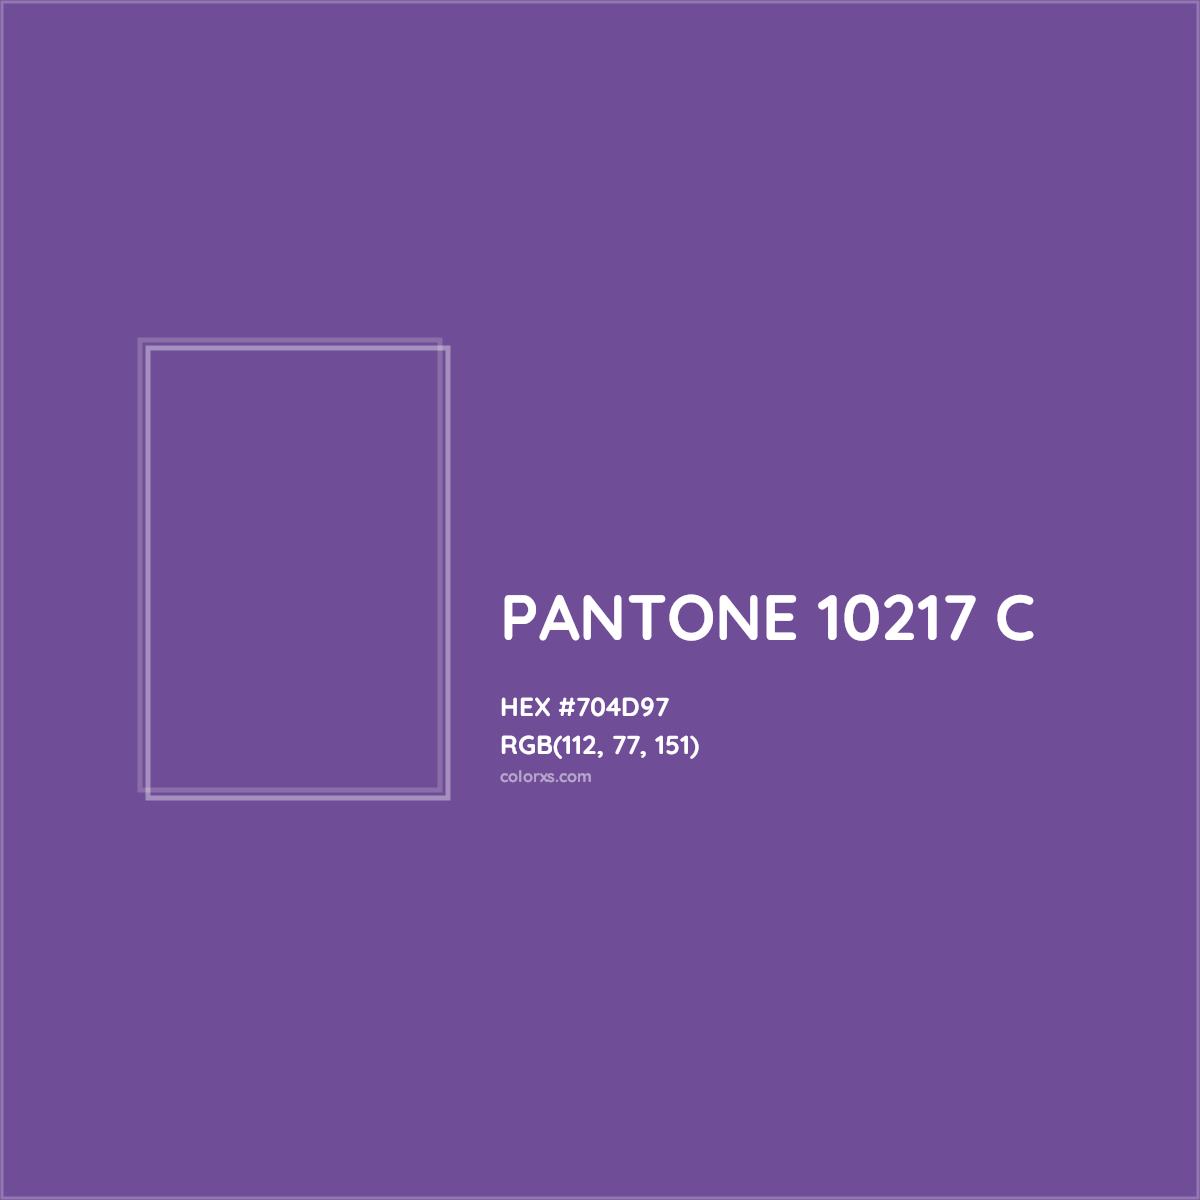 HEX #704D97 PANTONE 10217 C CMS Pantone PMS - Color Code